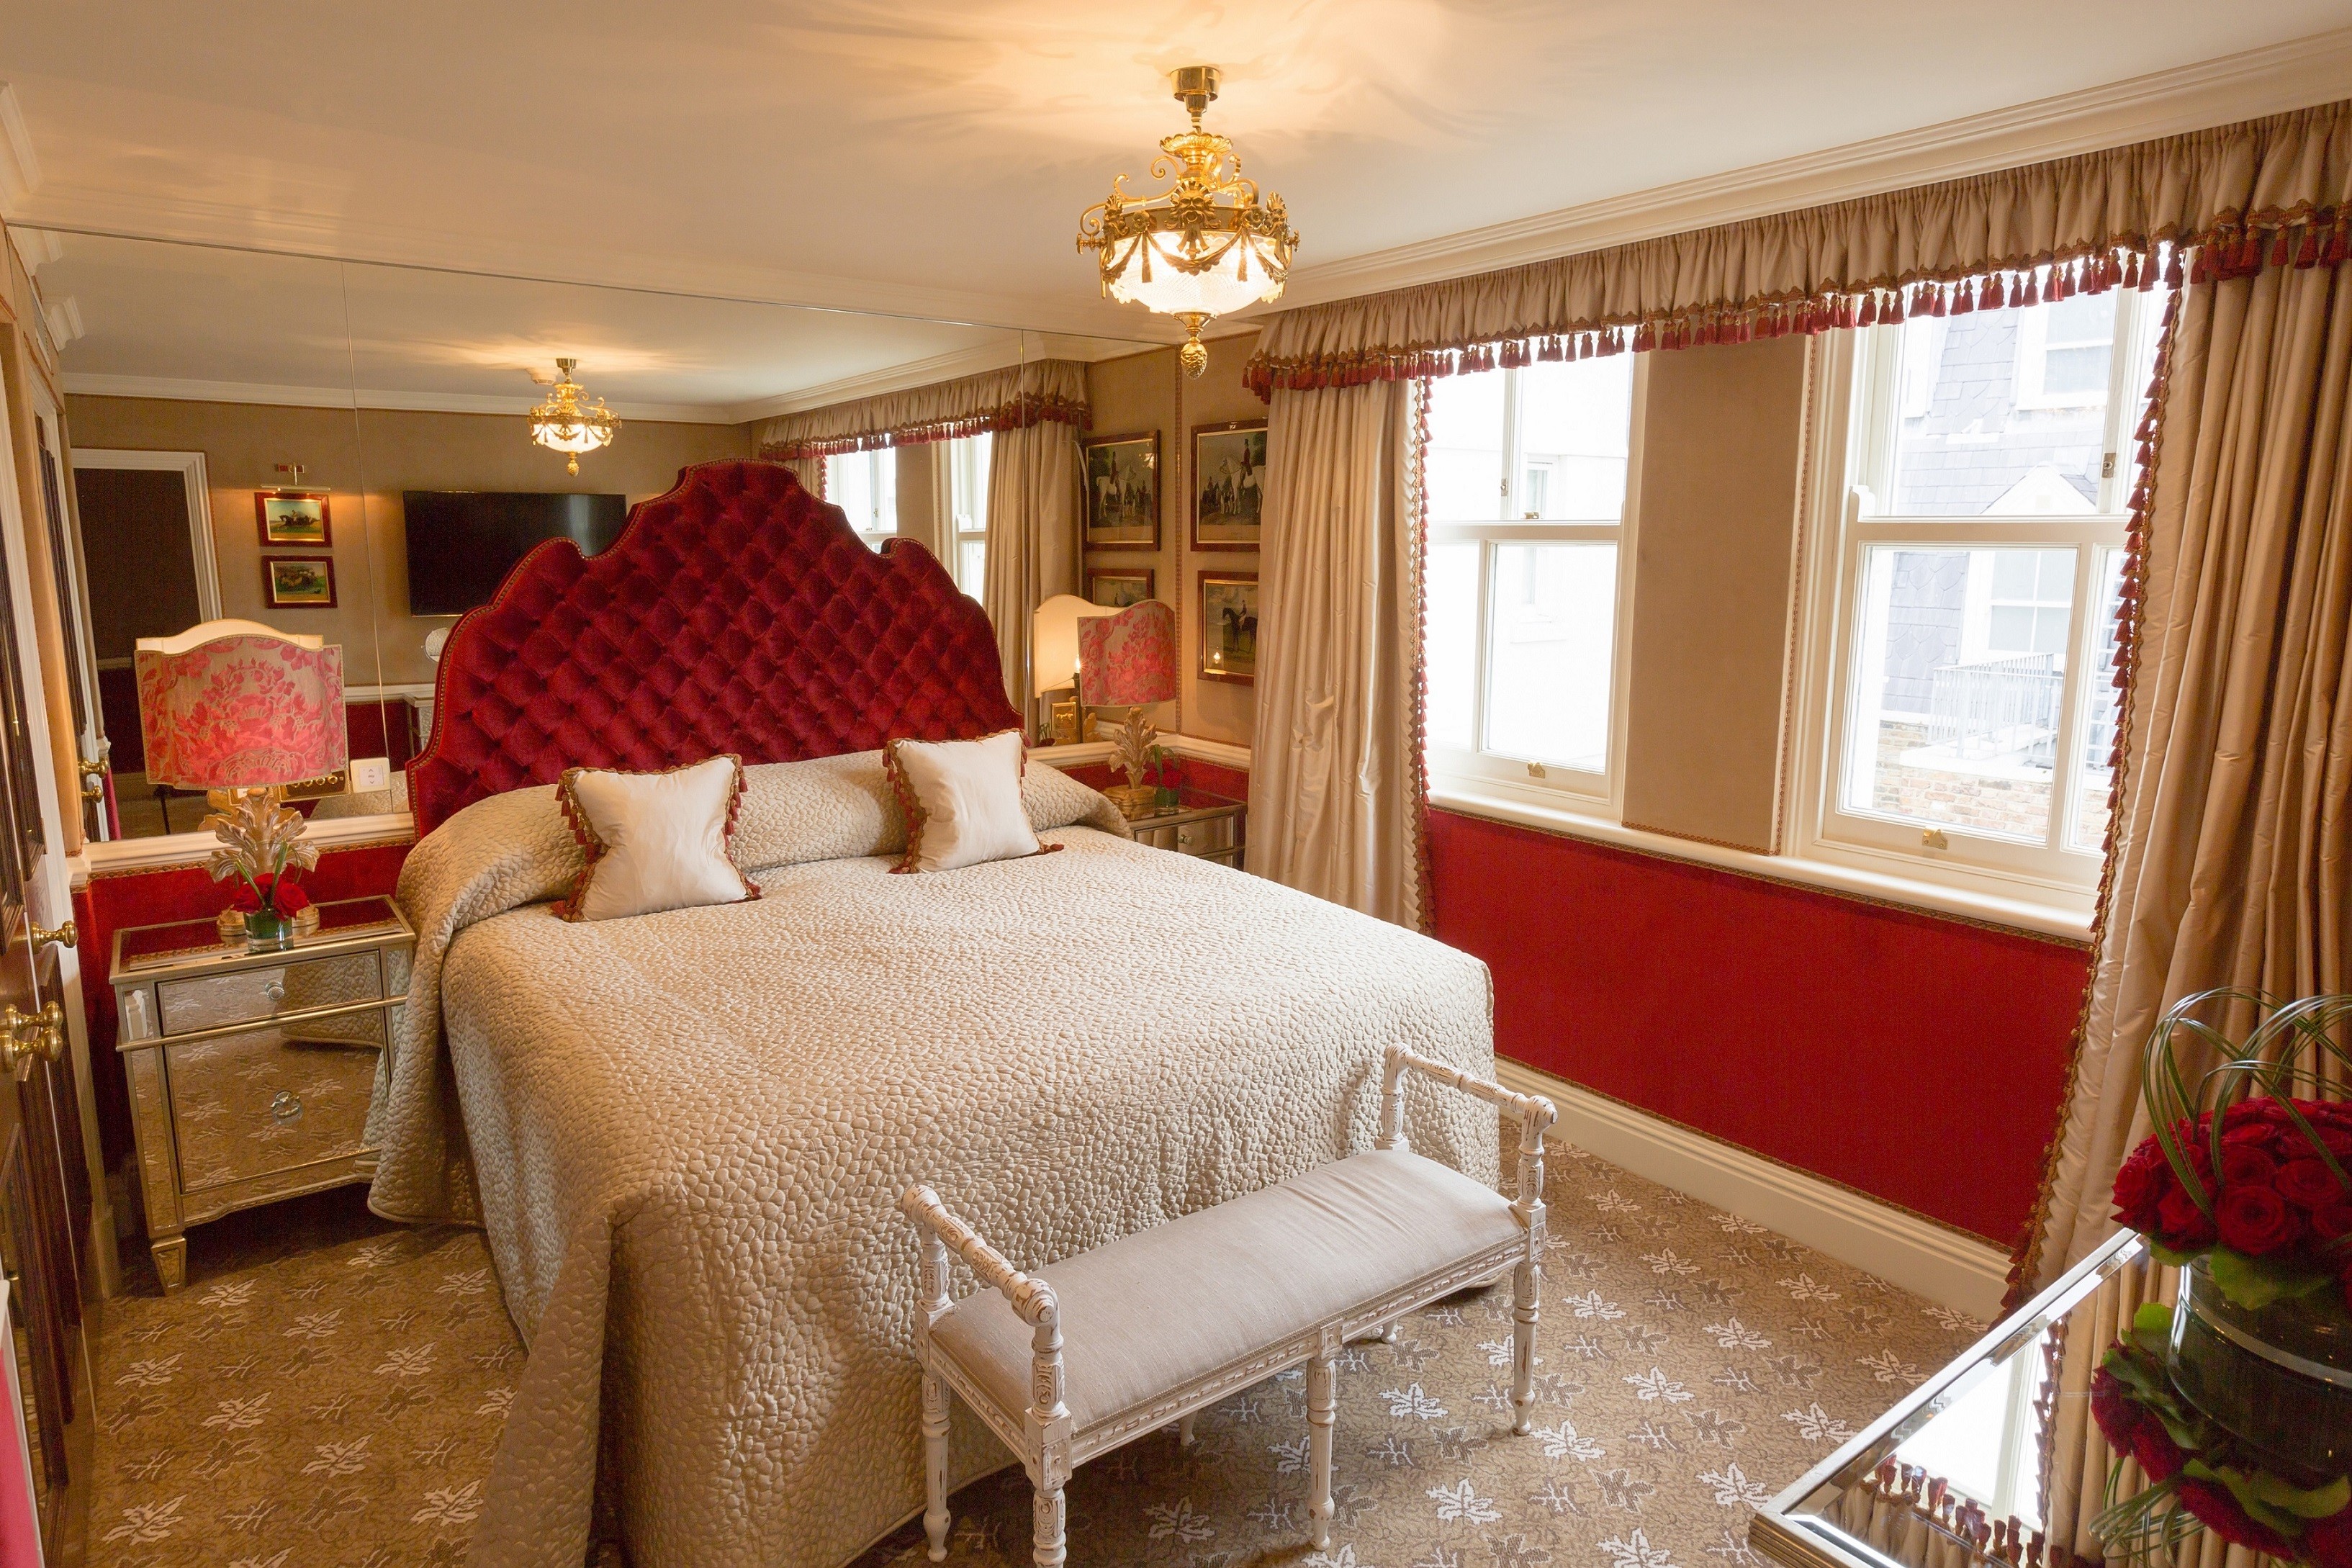 MILESTONE HOTEL, LONDON, #travel #londonhotels #luxuryhotels